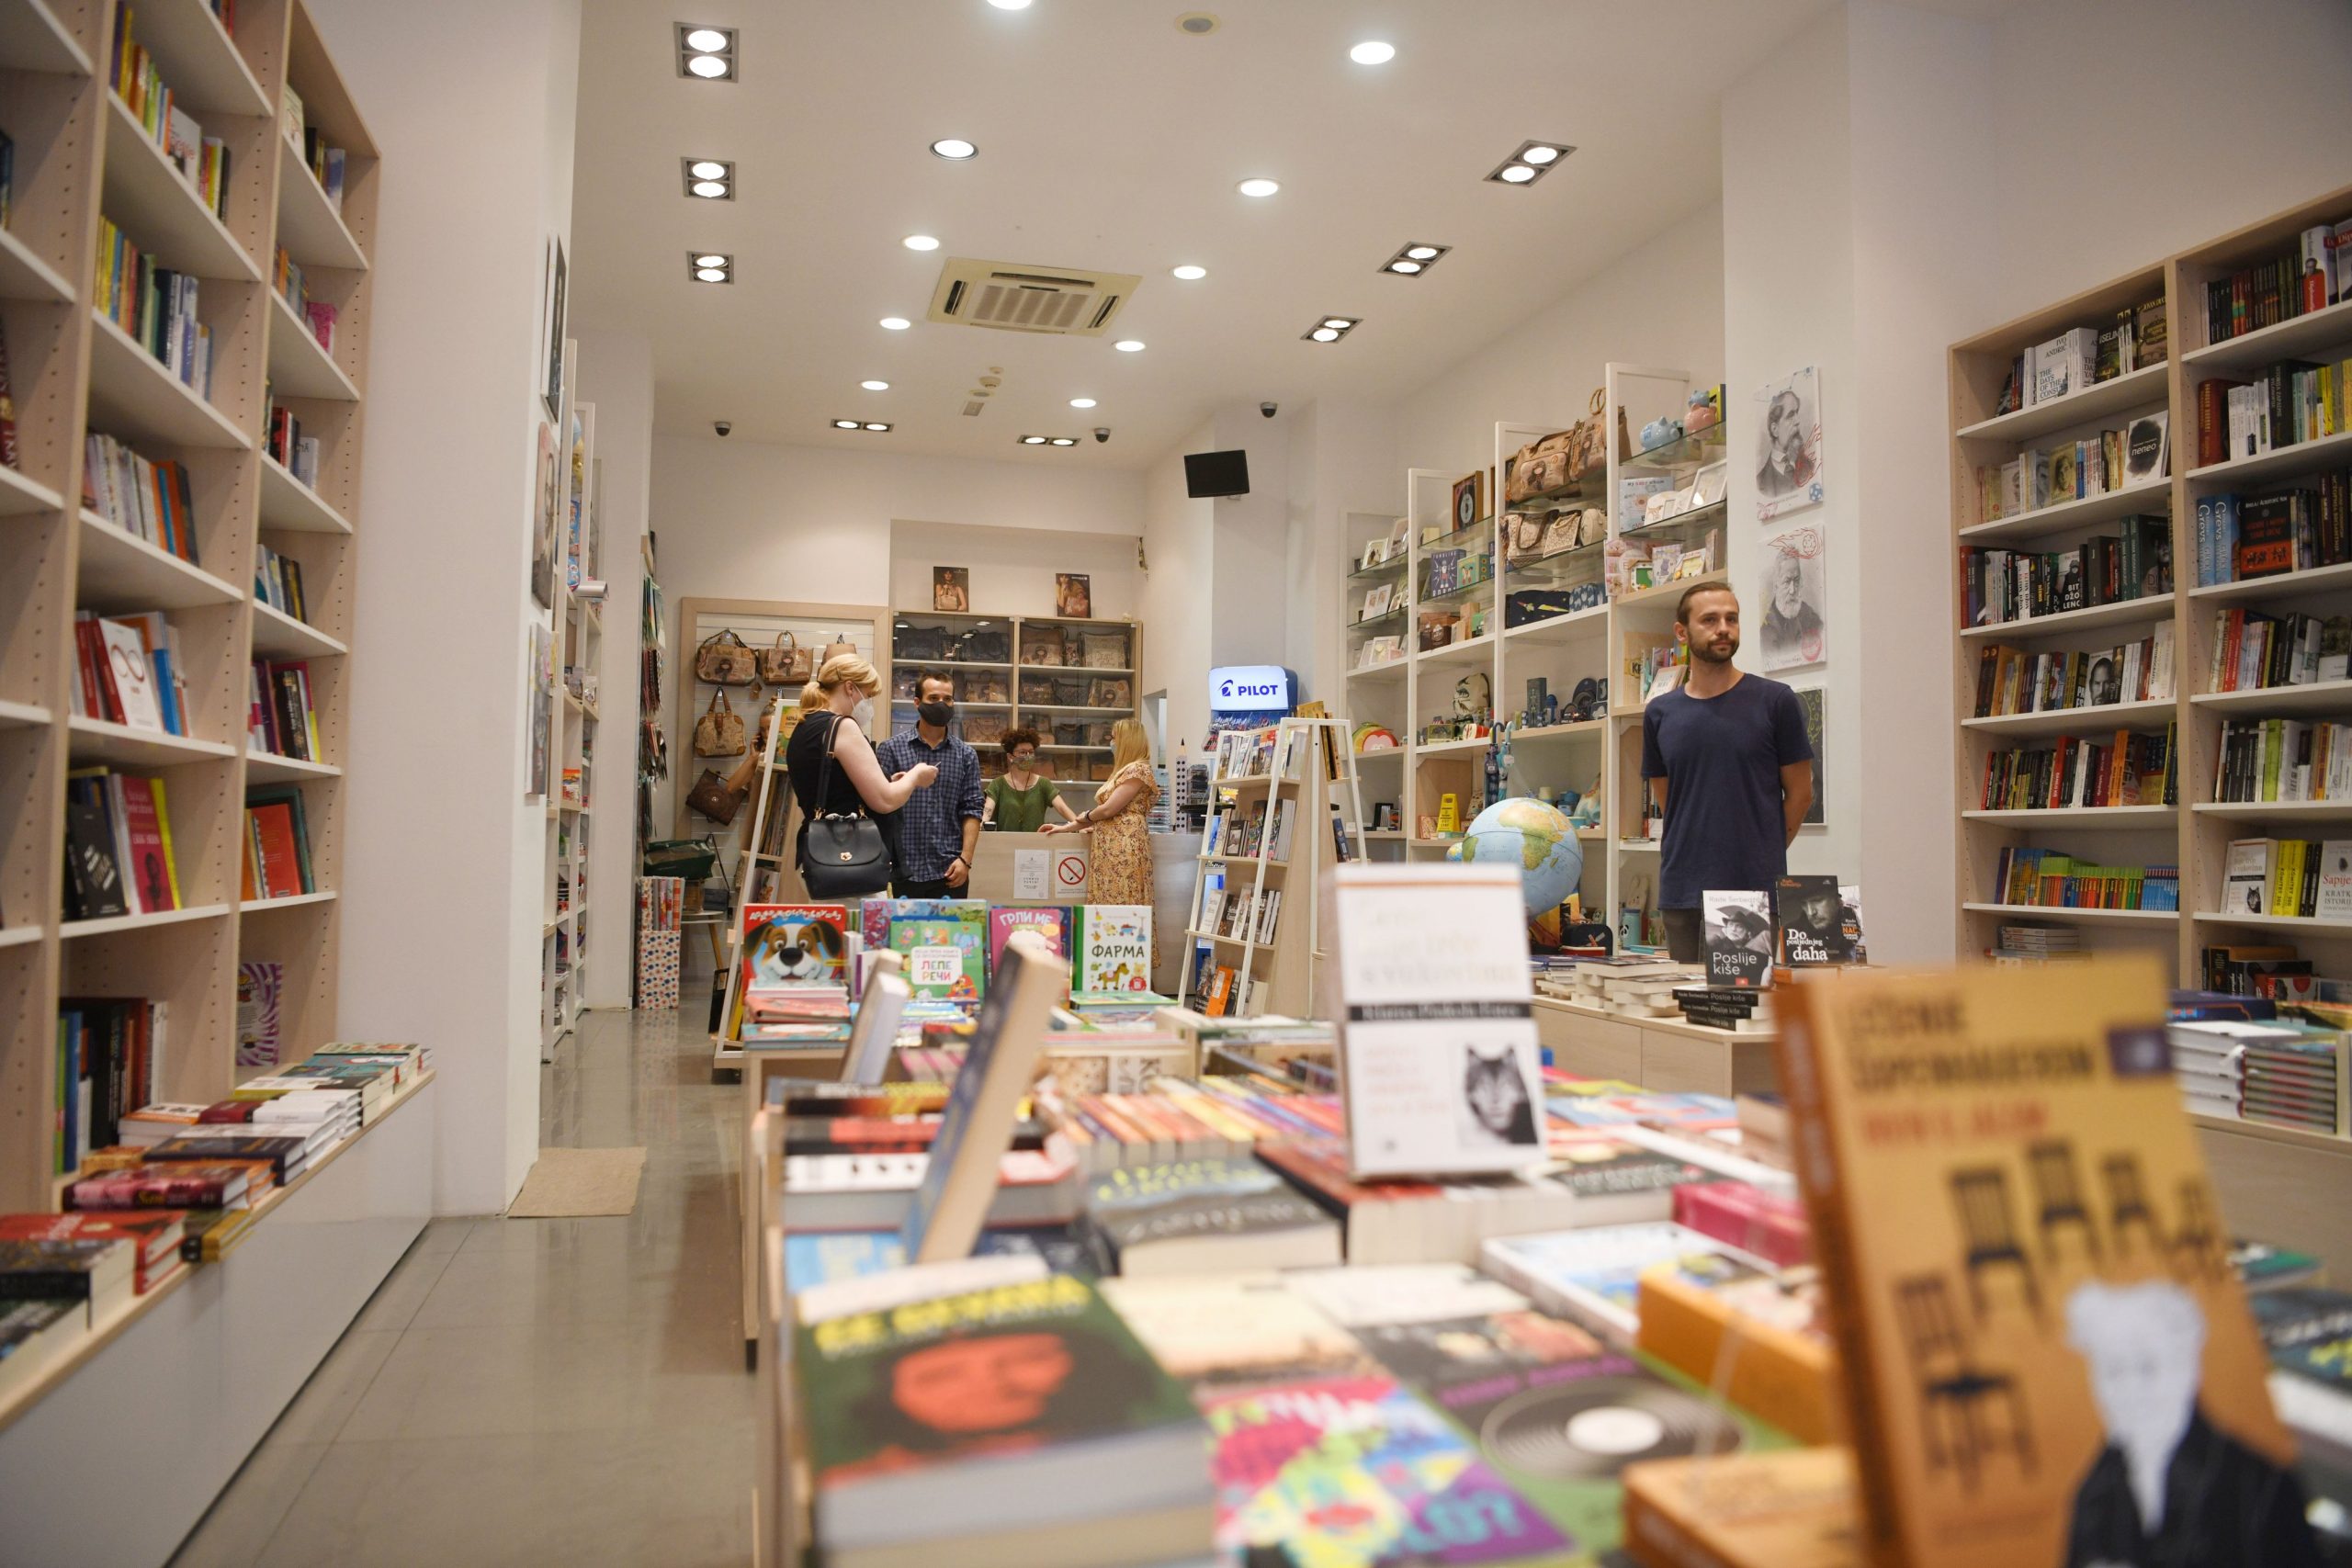 Otvaranje knjižare Kosmos u Knez Mihailovoj ulici, Knez Mihailova ulica, knjižara, Kosmos